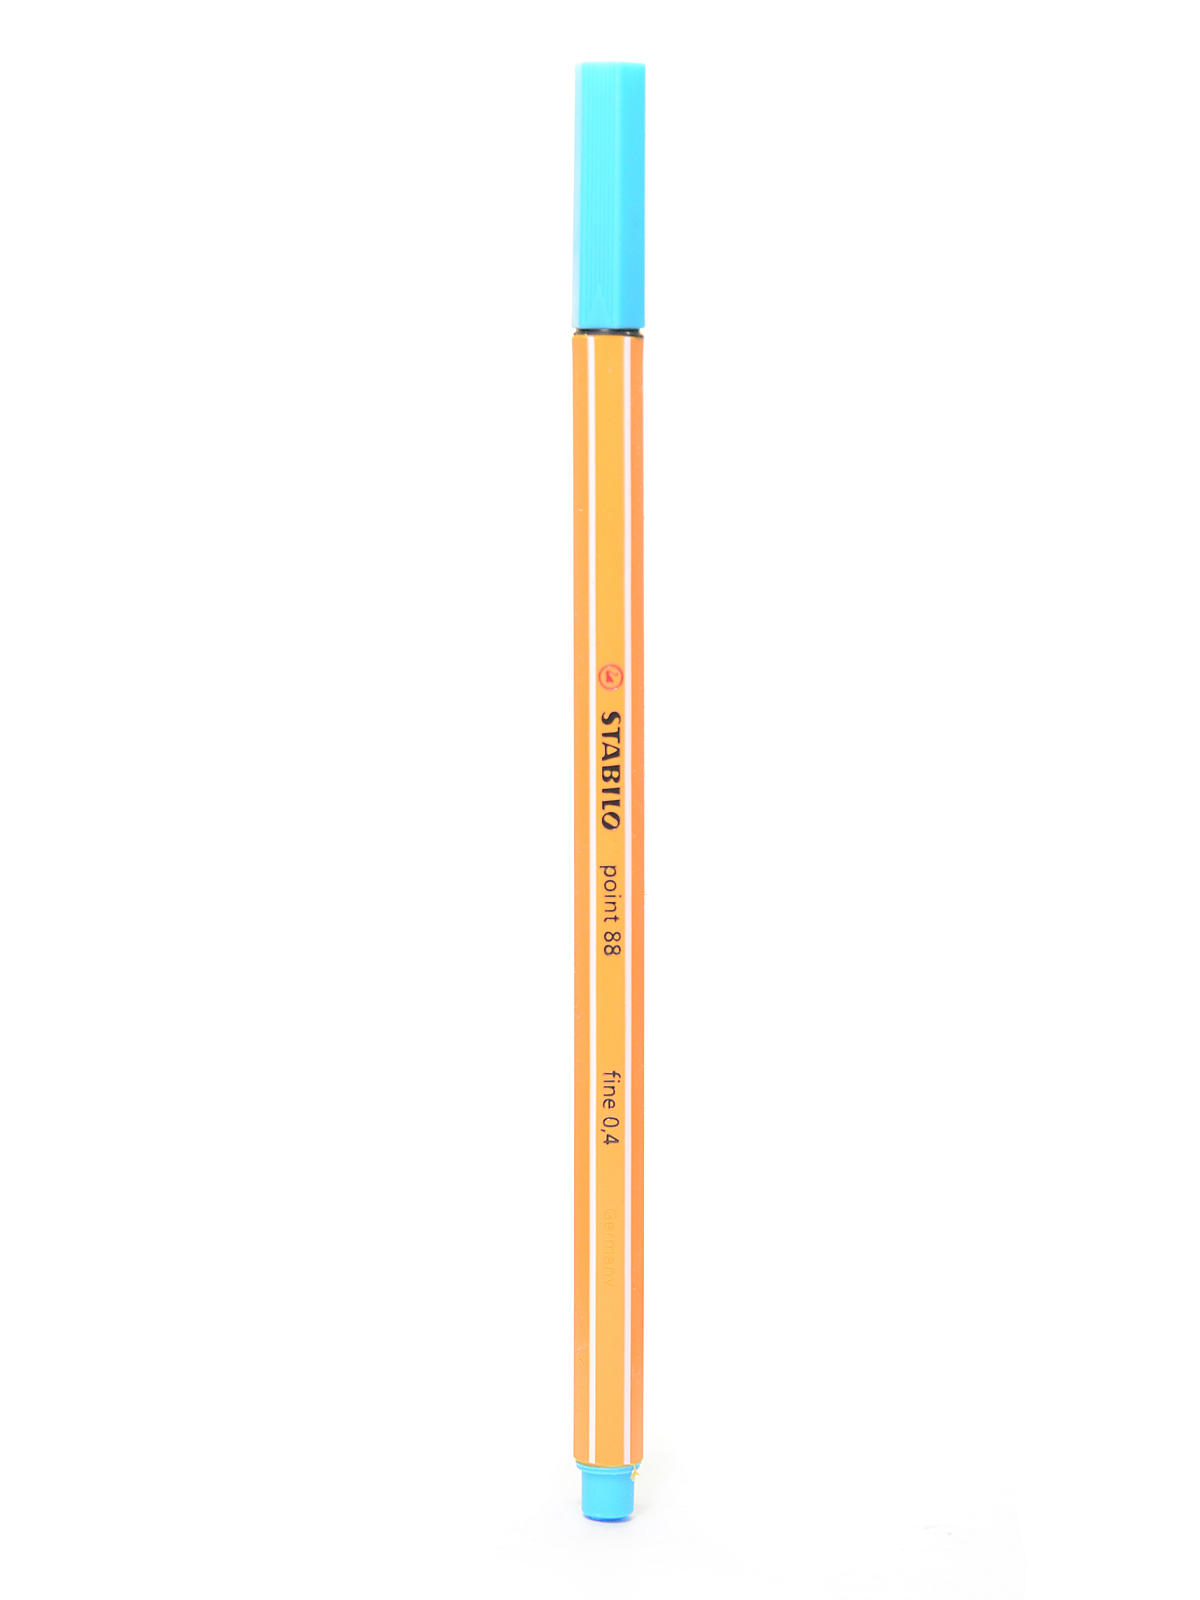 STABILO Point 88 FINELINER Pigment Liner 88/41 (Pack of 3) - Blue